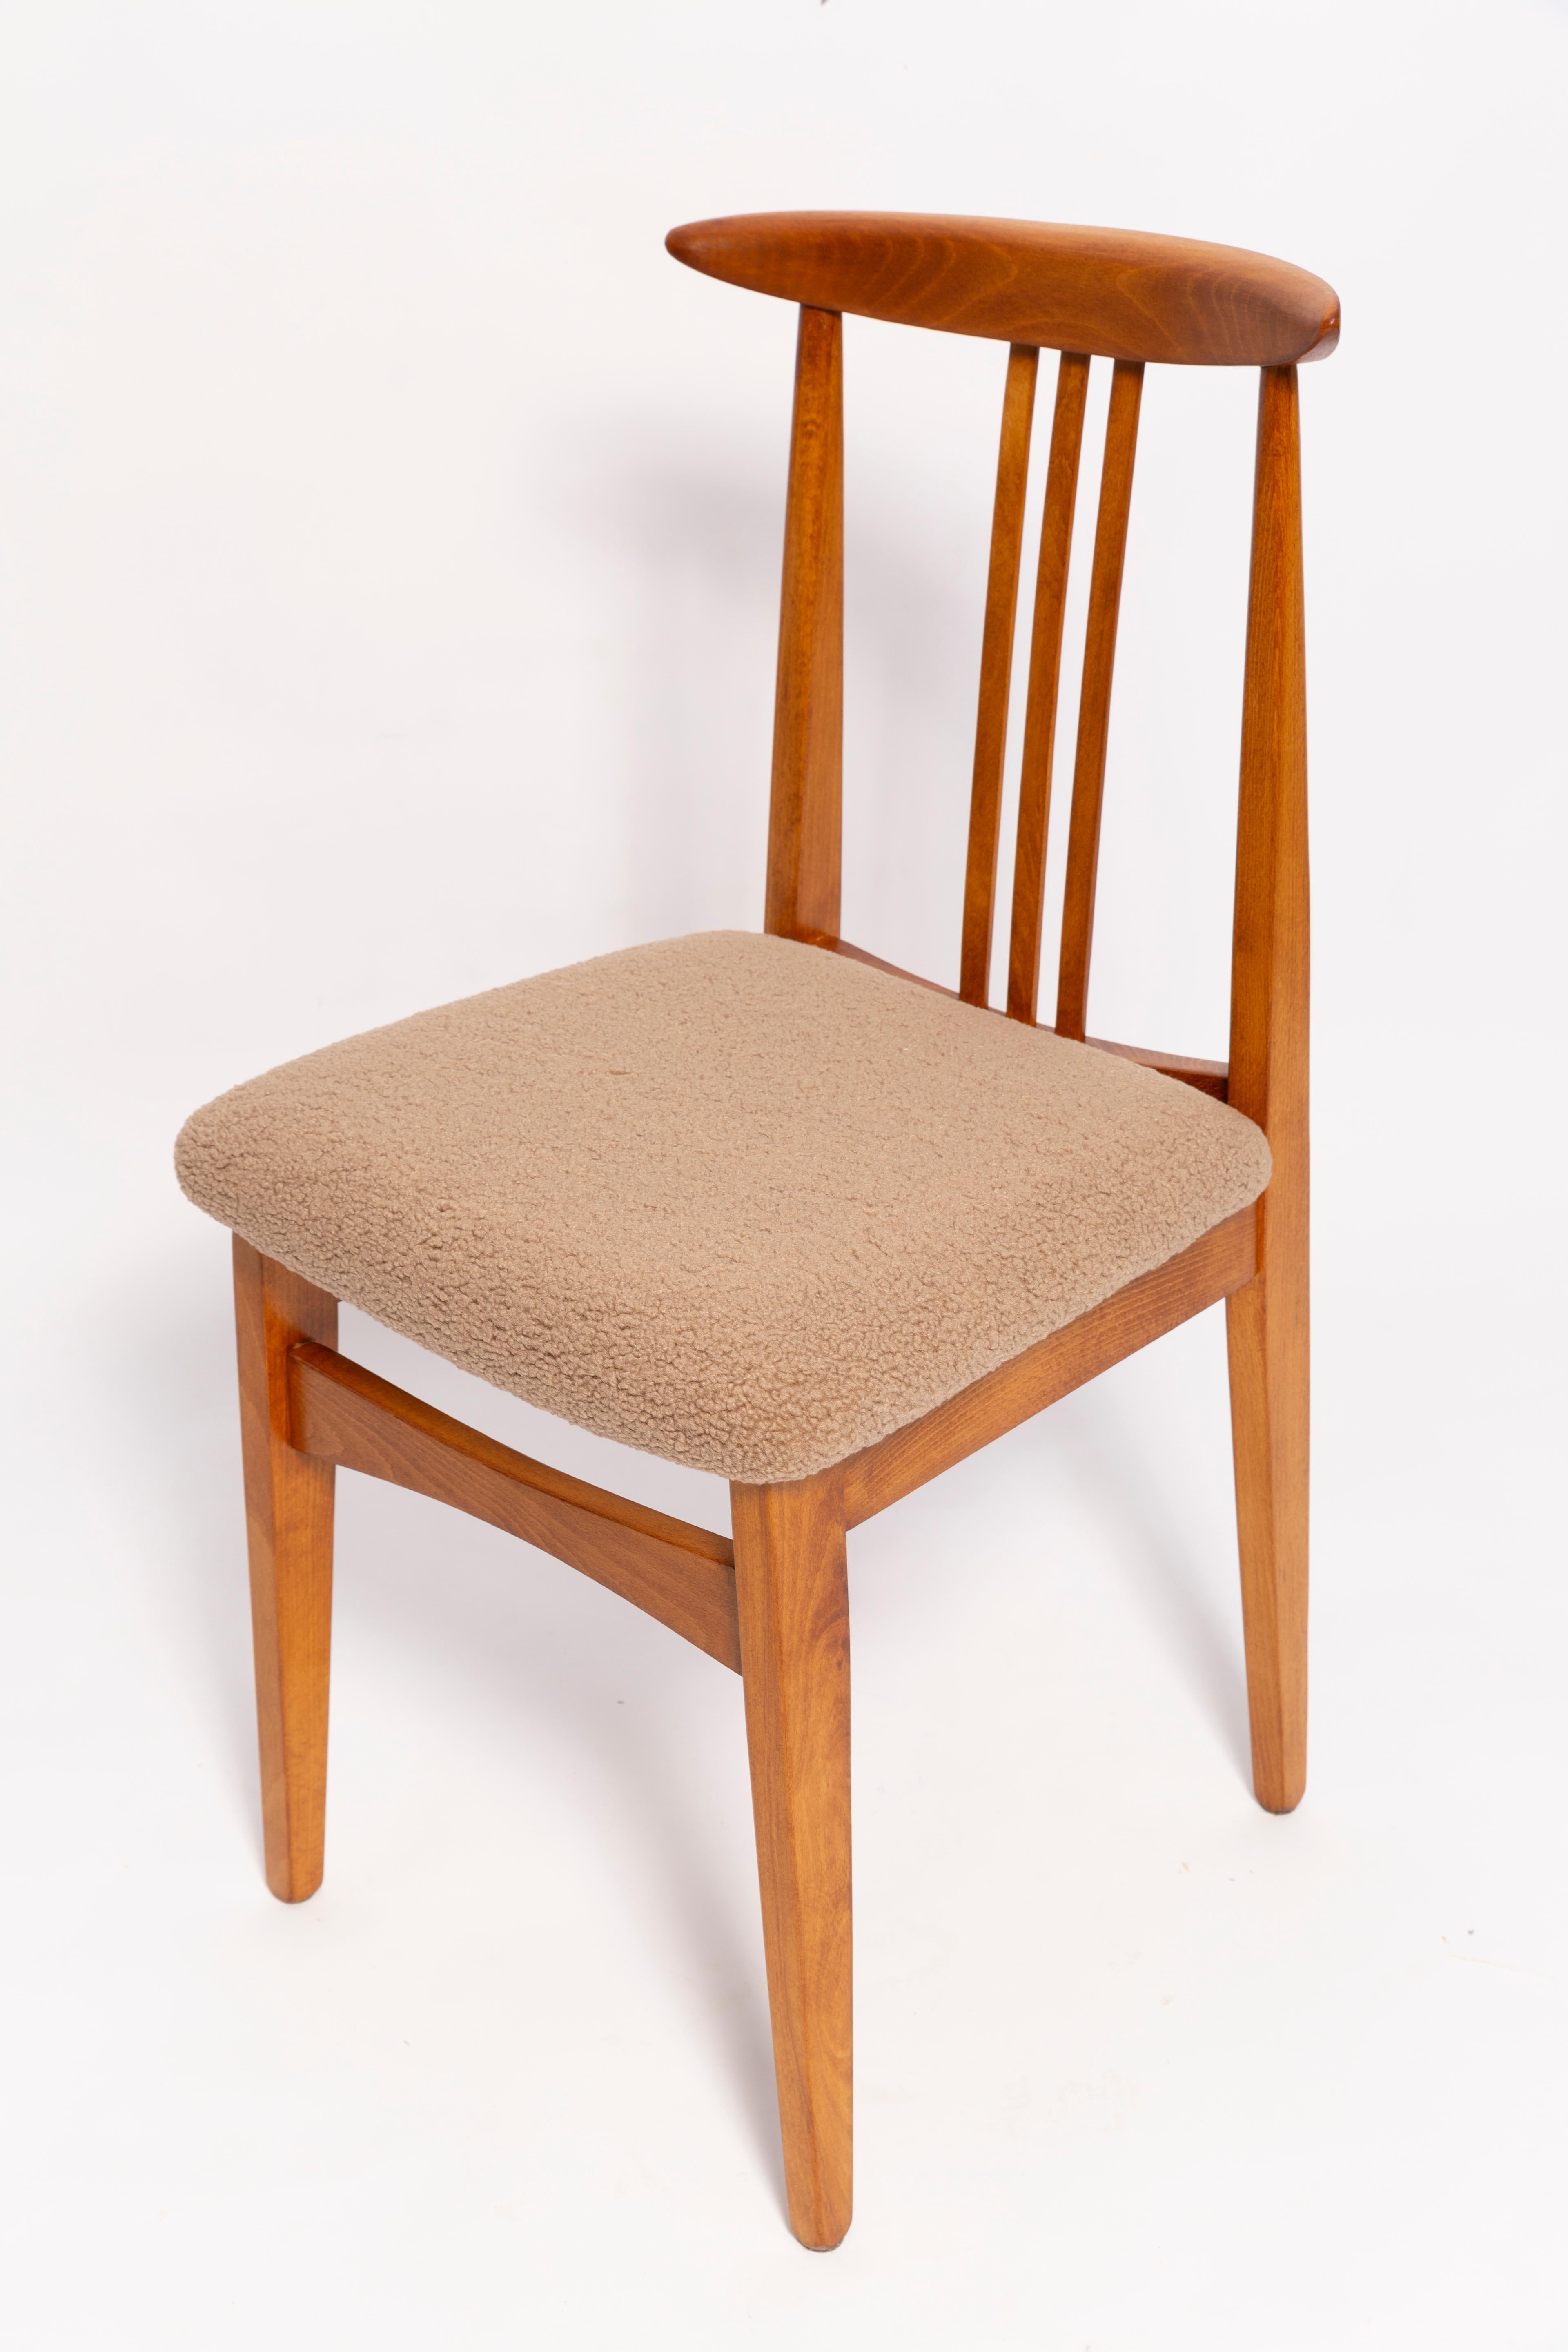 Six Mid-Century Latte Boucle Chairs, Medium Wood, M. Zielinski, Europe 1960s For Sale 1